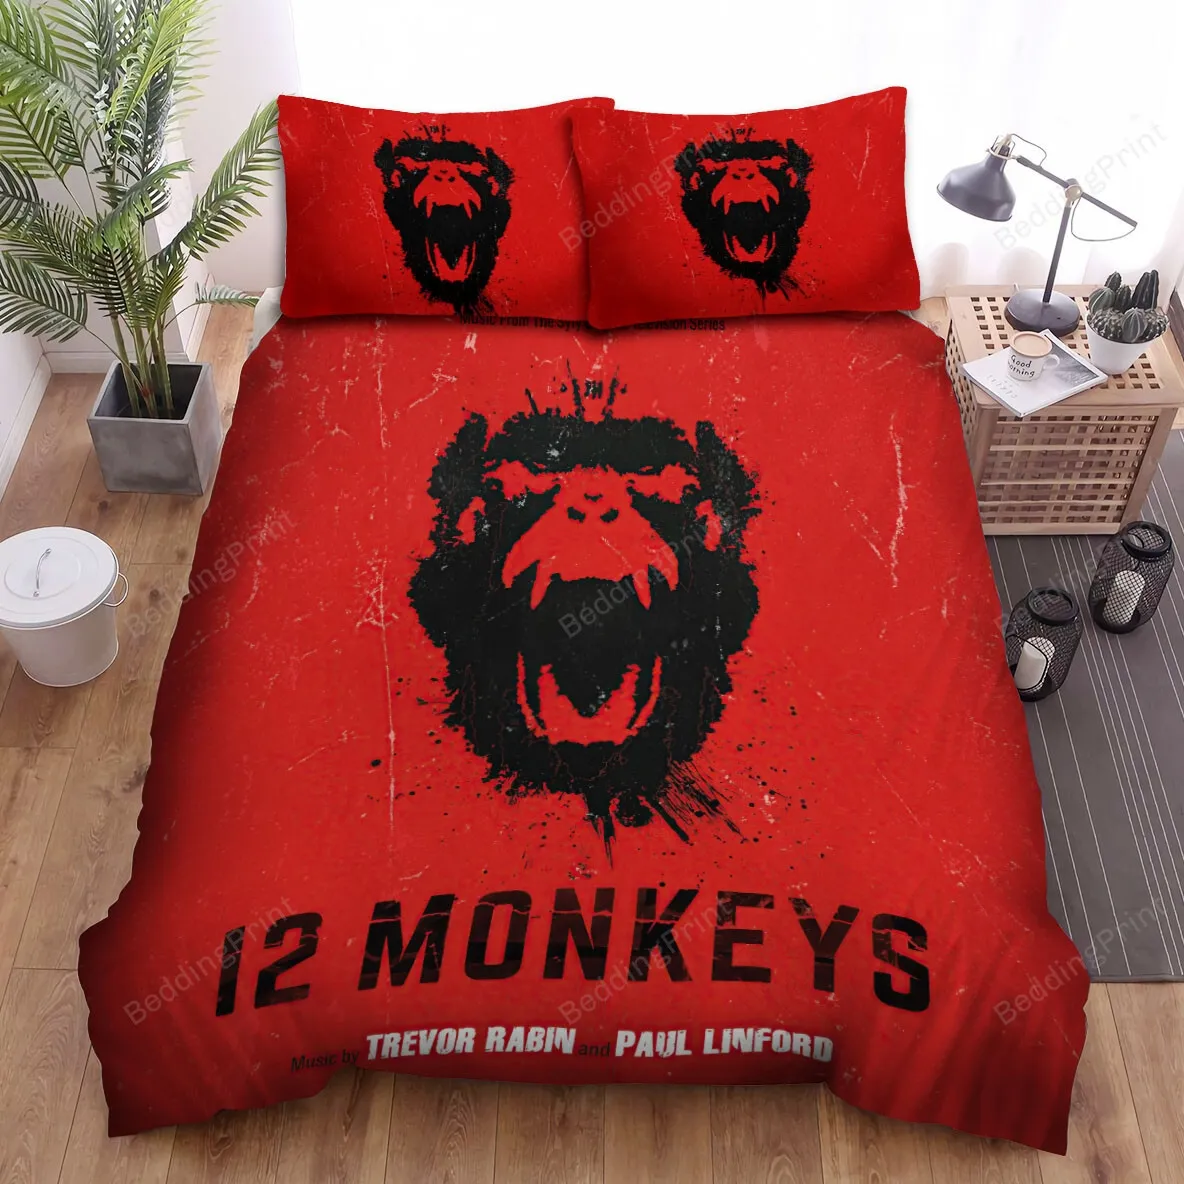 12 Monkeys (20152018) Red And Black Movie Poster Bed Sheets Spread Comforter Duvet Cover Bedding Sets